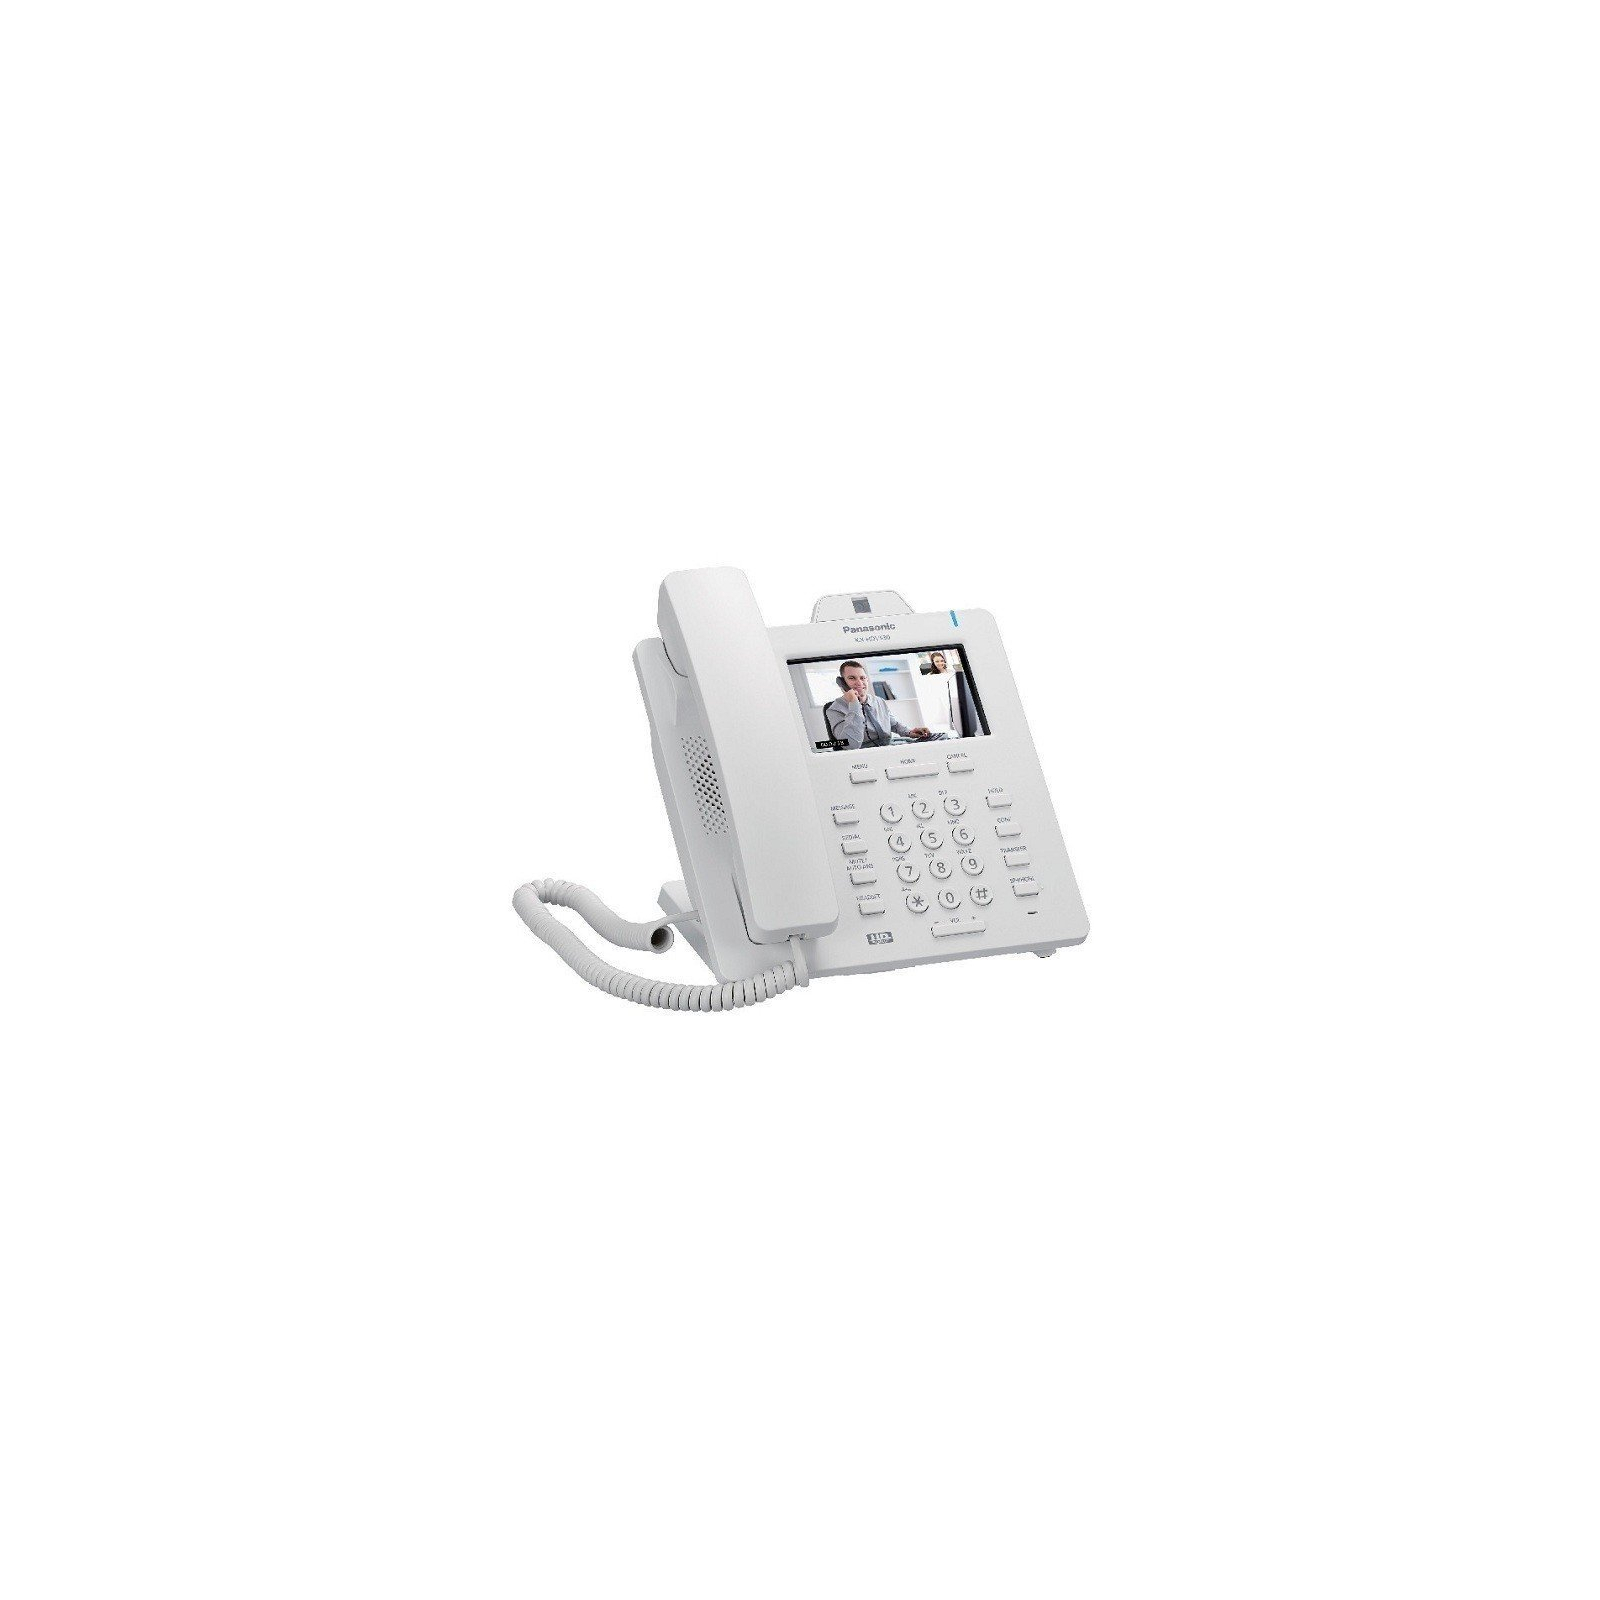 IP телефон Panasonic KX-HDV430RU